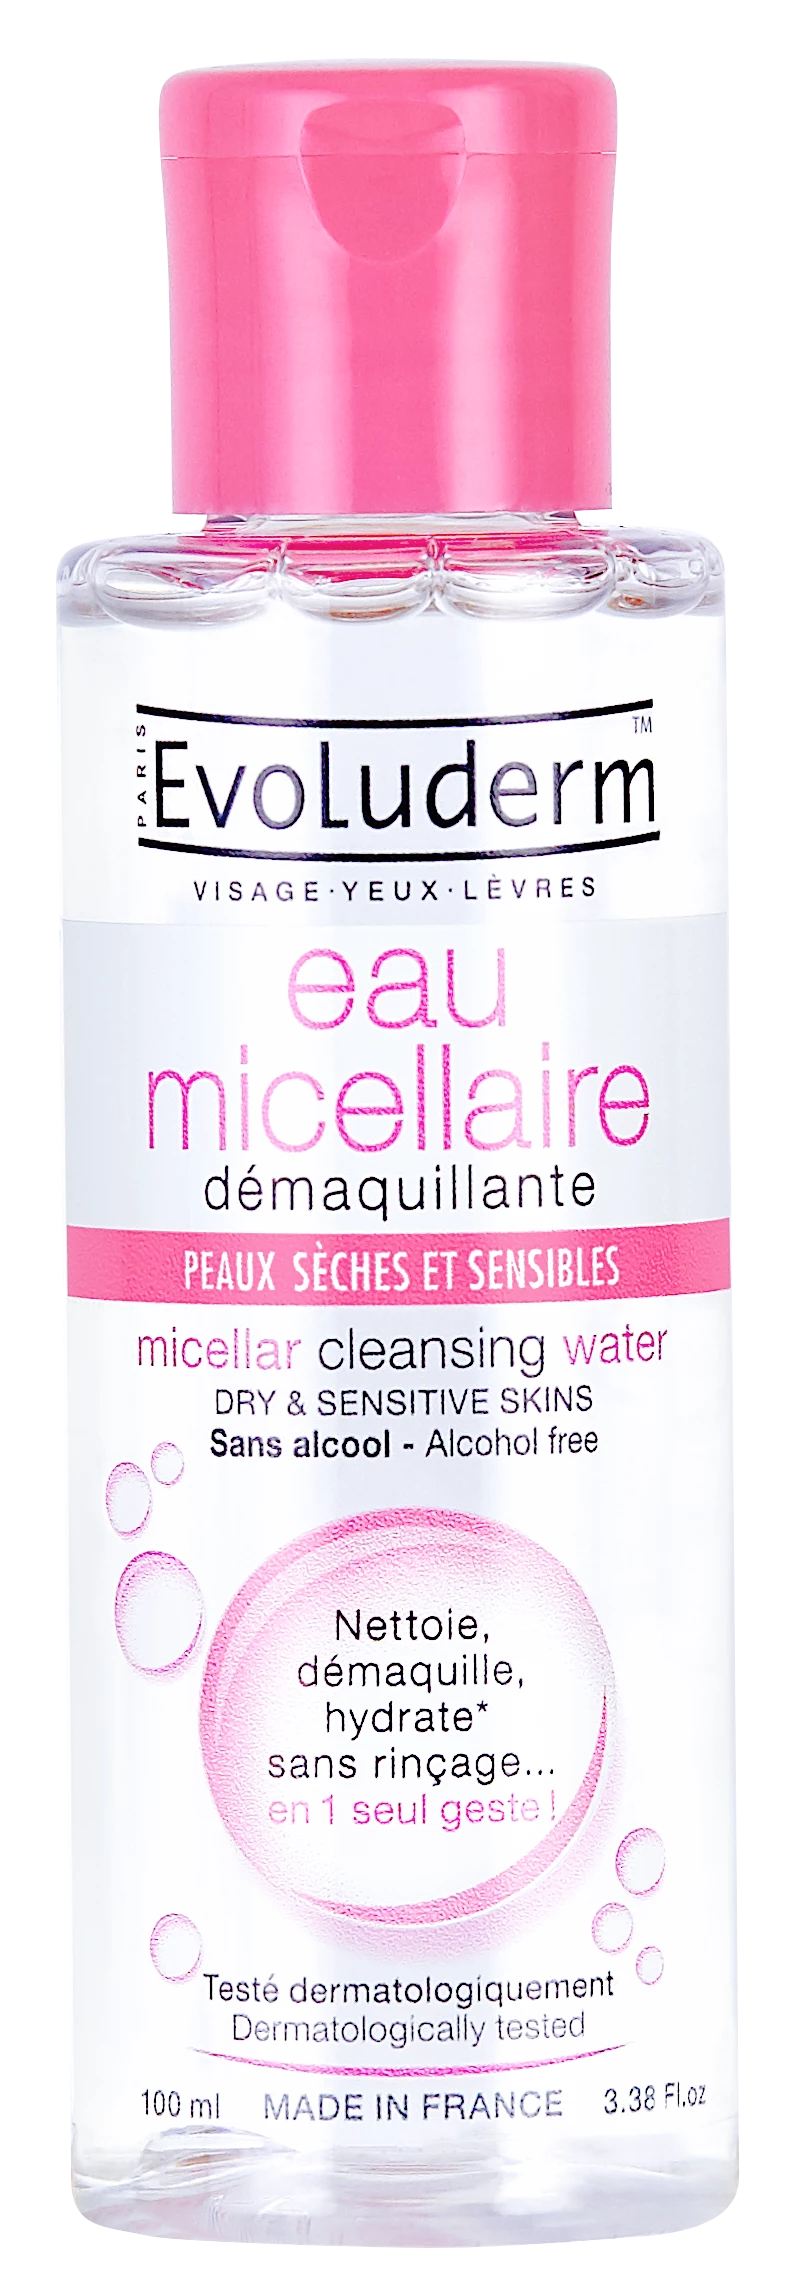 Micellar Water Dry/Sensitive Skin, 100ml - EVOLUDERM